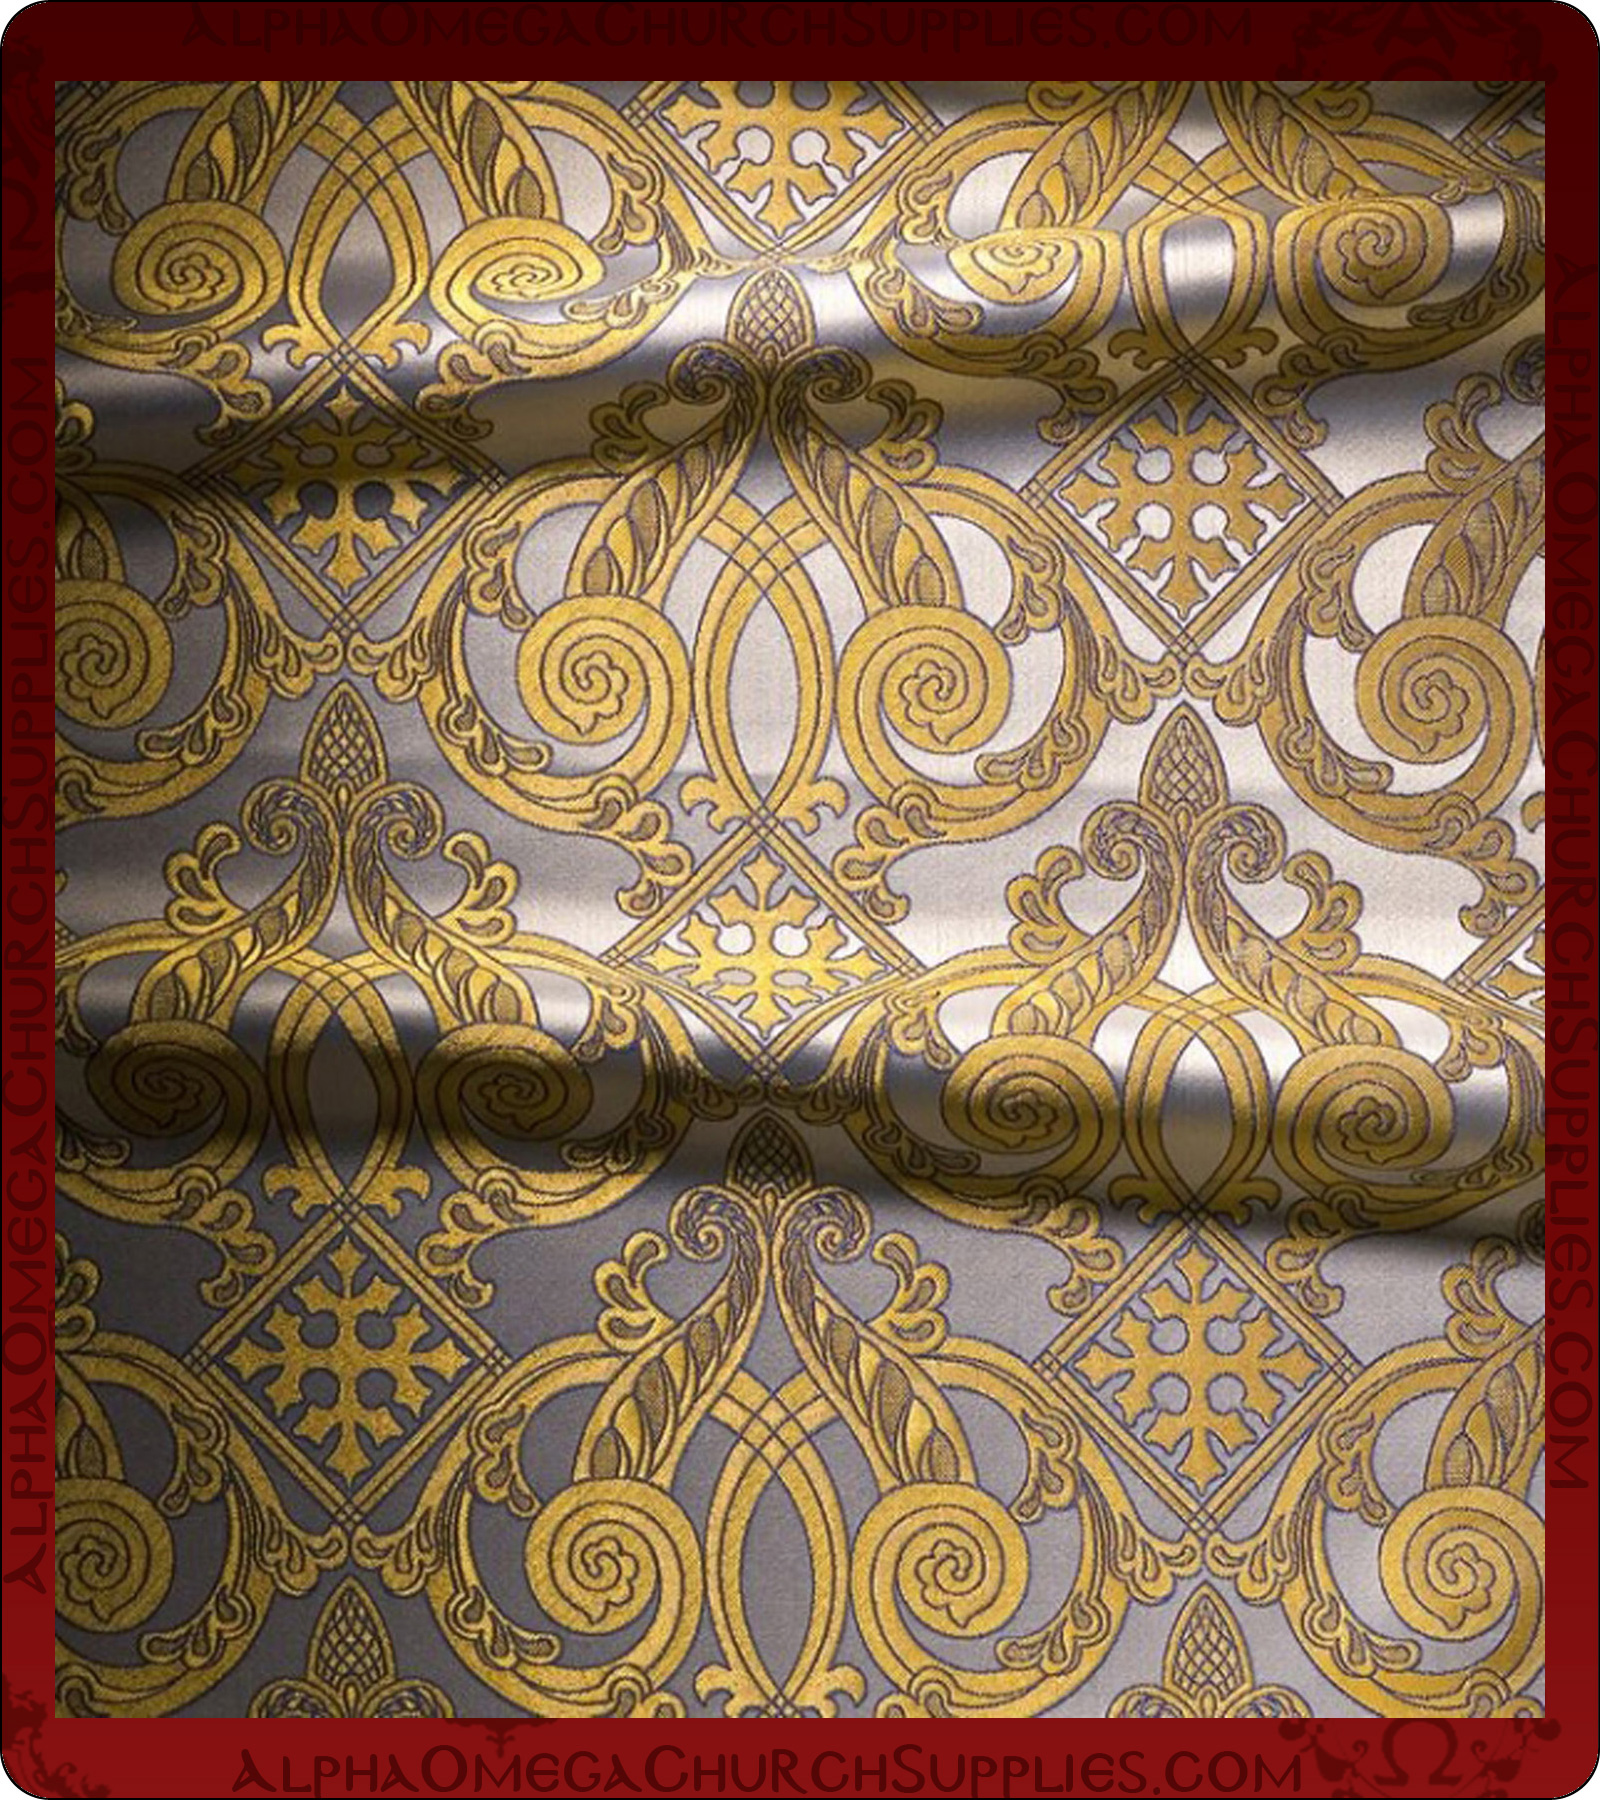 metallic brocade fabric texture